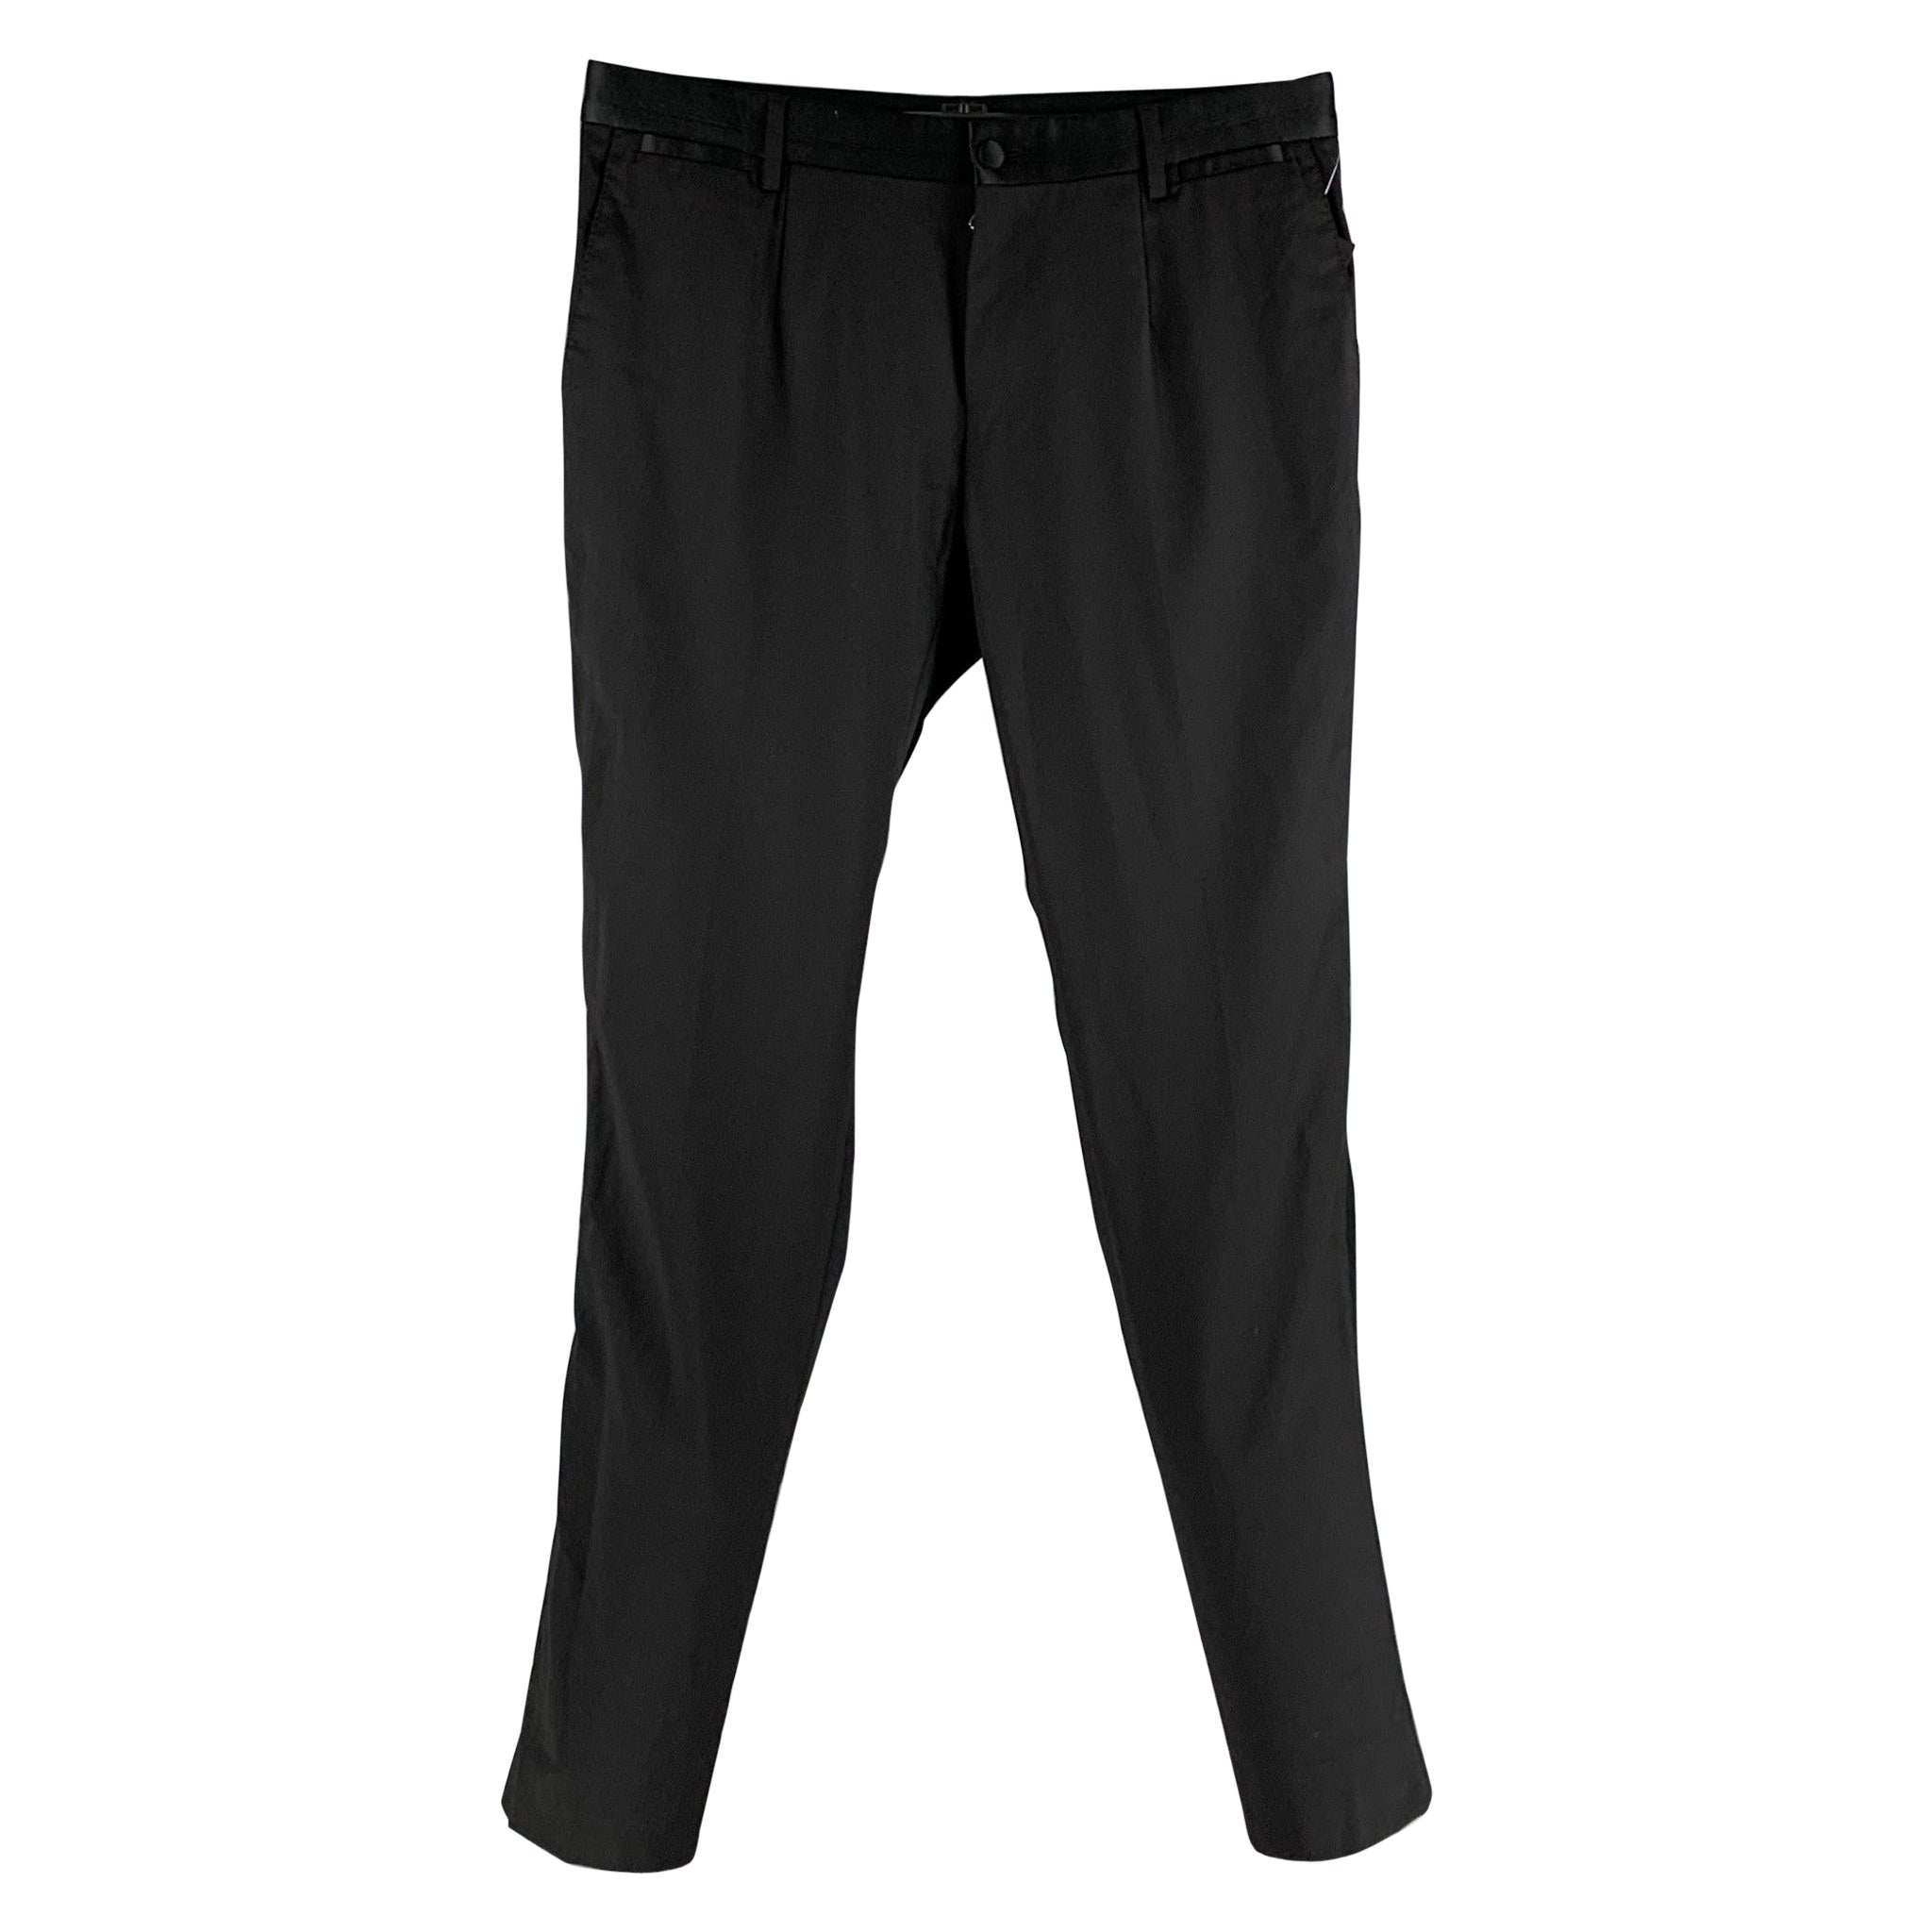 DOLCE & GABBANA Size 32 Black Wool Blend Tuxedo Dress Pants For Sale